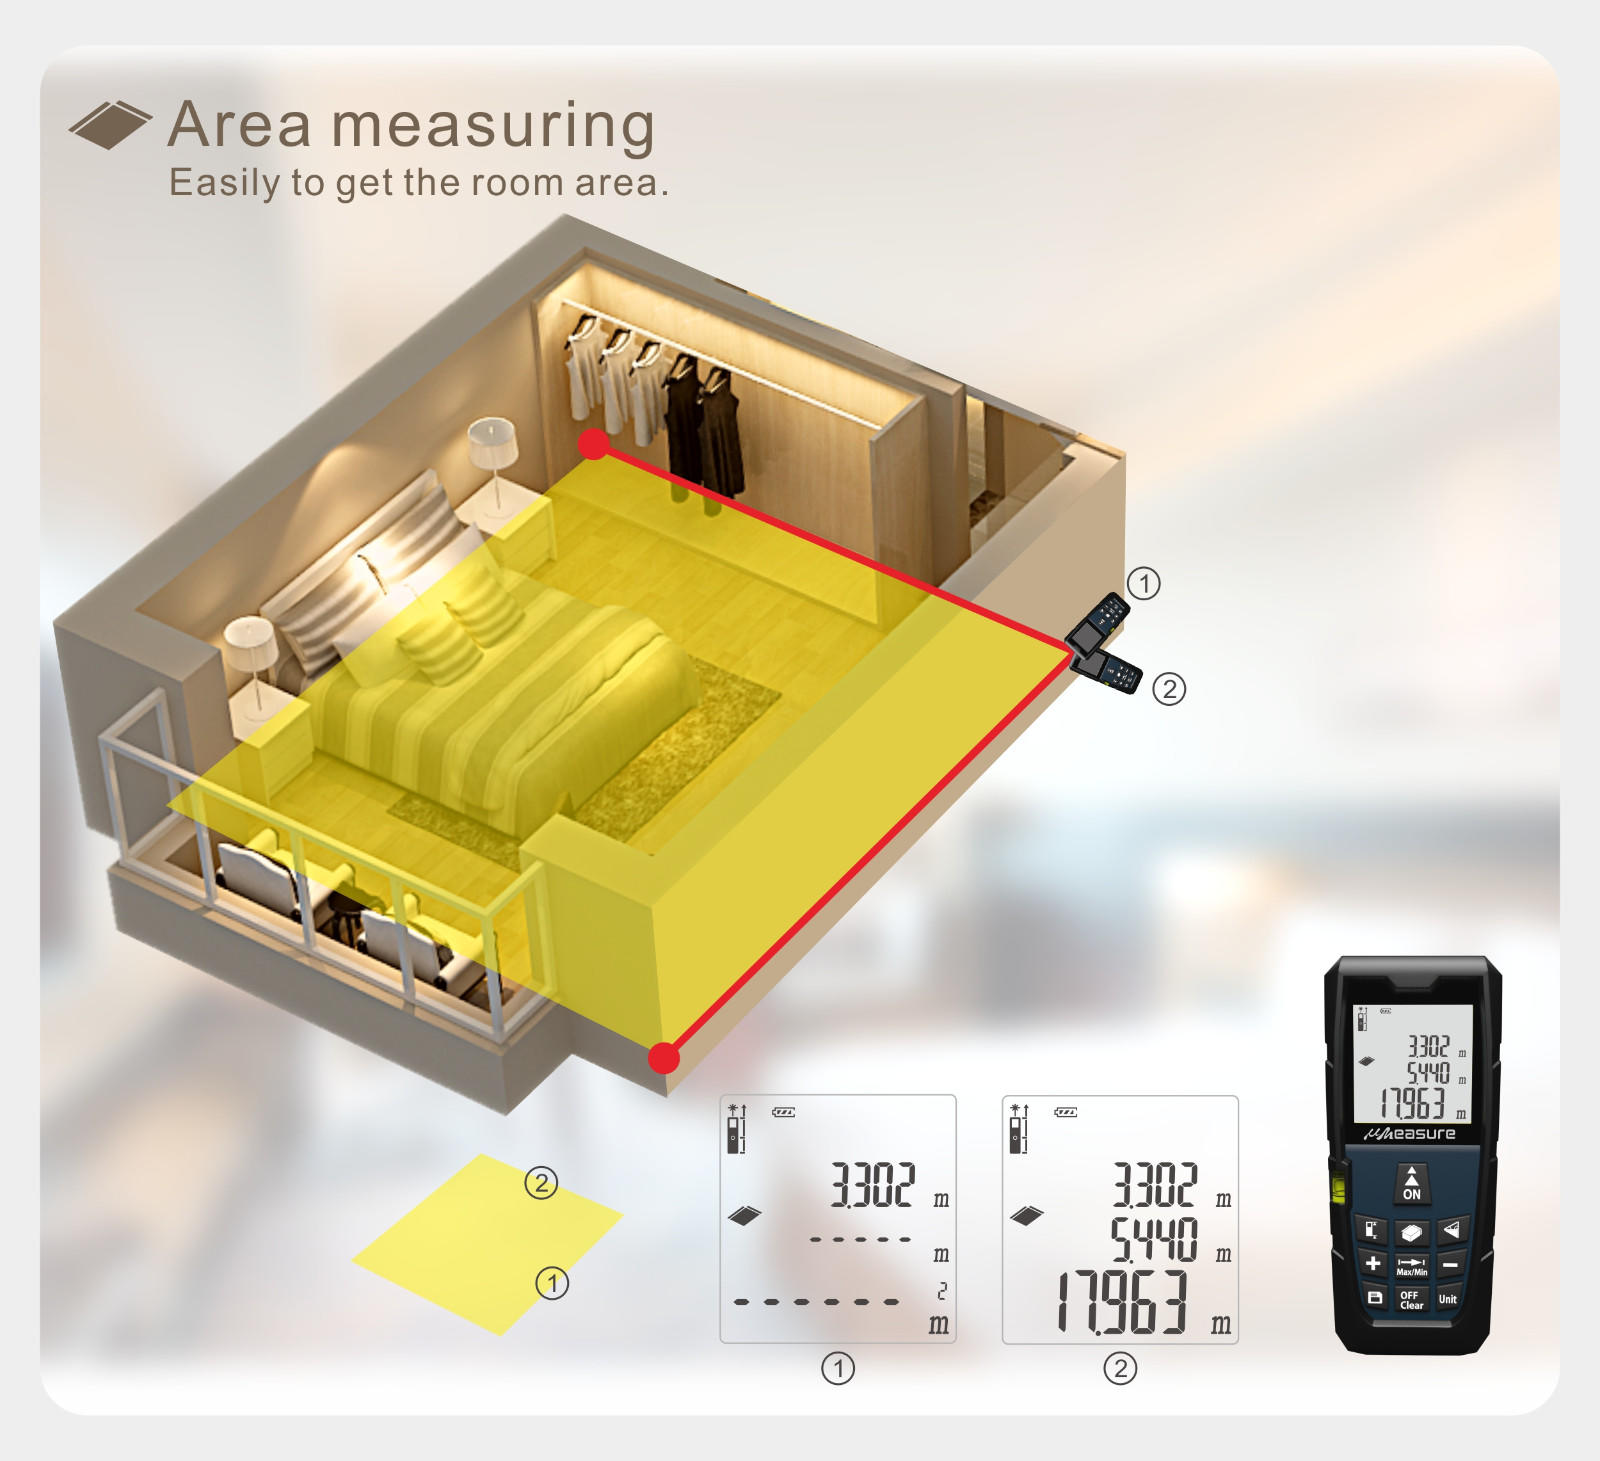 large laser range meter household UMeasure company